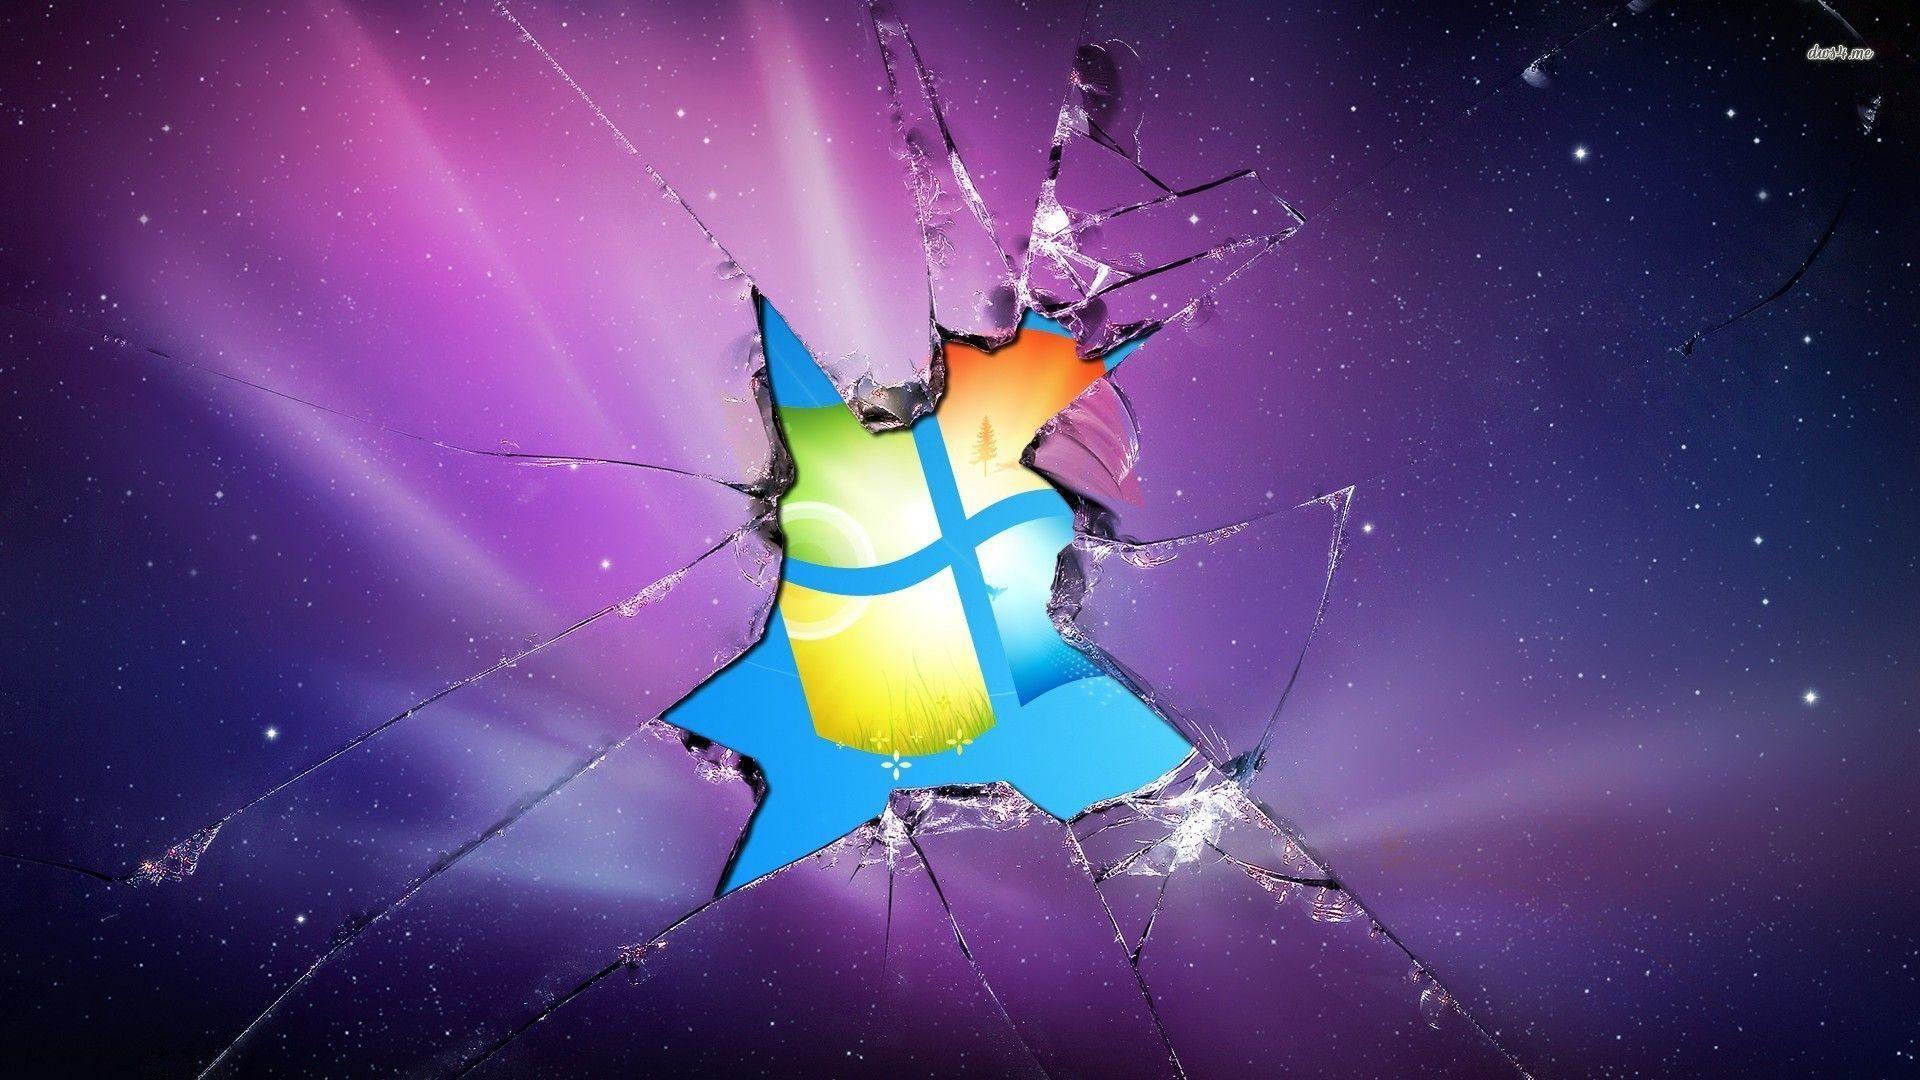 Wallpapers For > Windows 7 Broken Glass Backgrounds